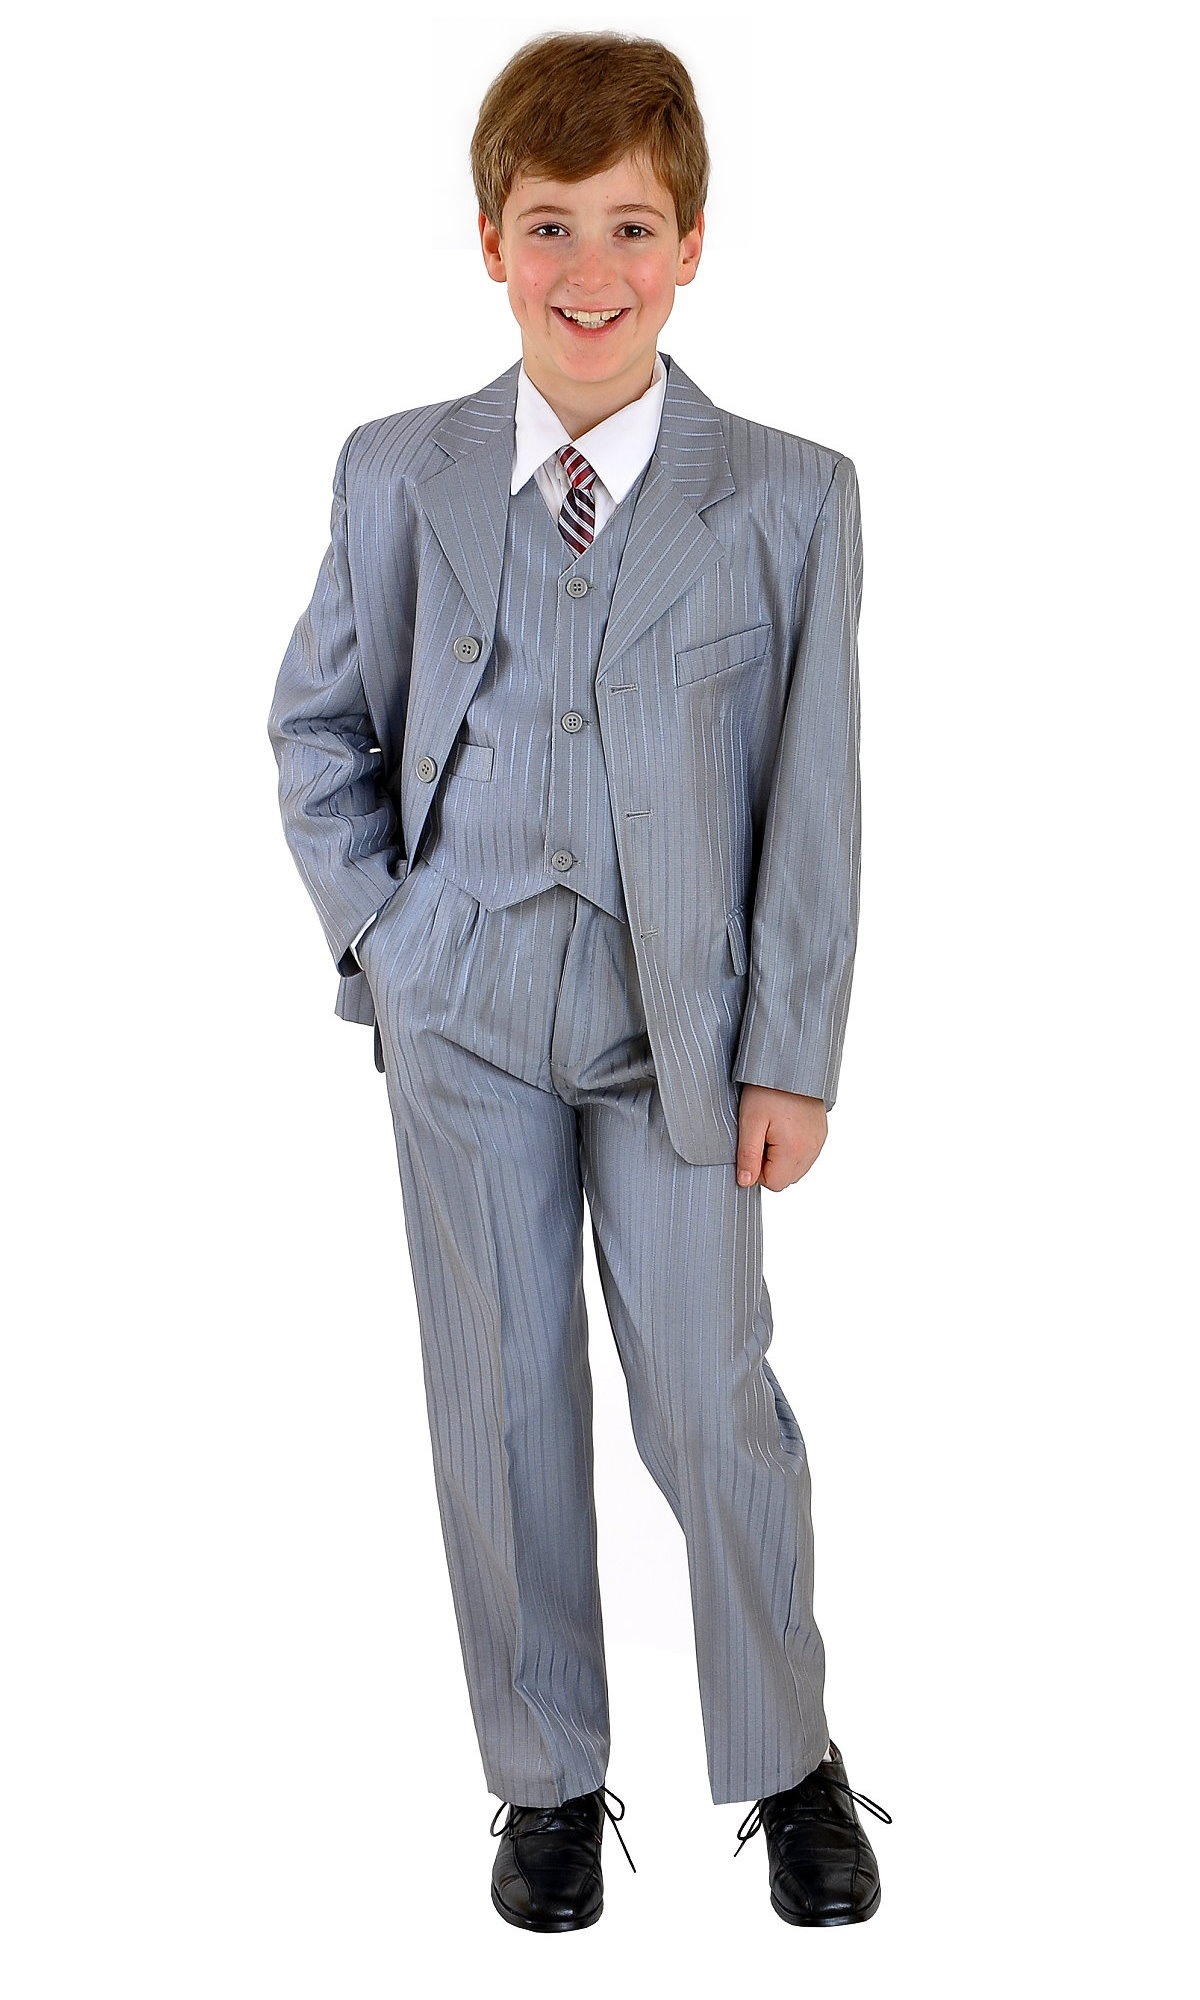 bedeutend Family Trends Anzug online BAUR »Kombination Hose Hemd Set Sakko Krawatte bestellen 5 | Teilig«, Weste